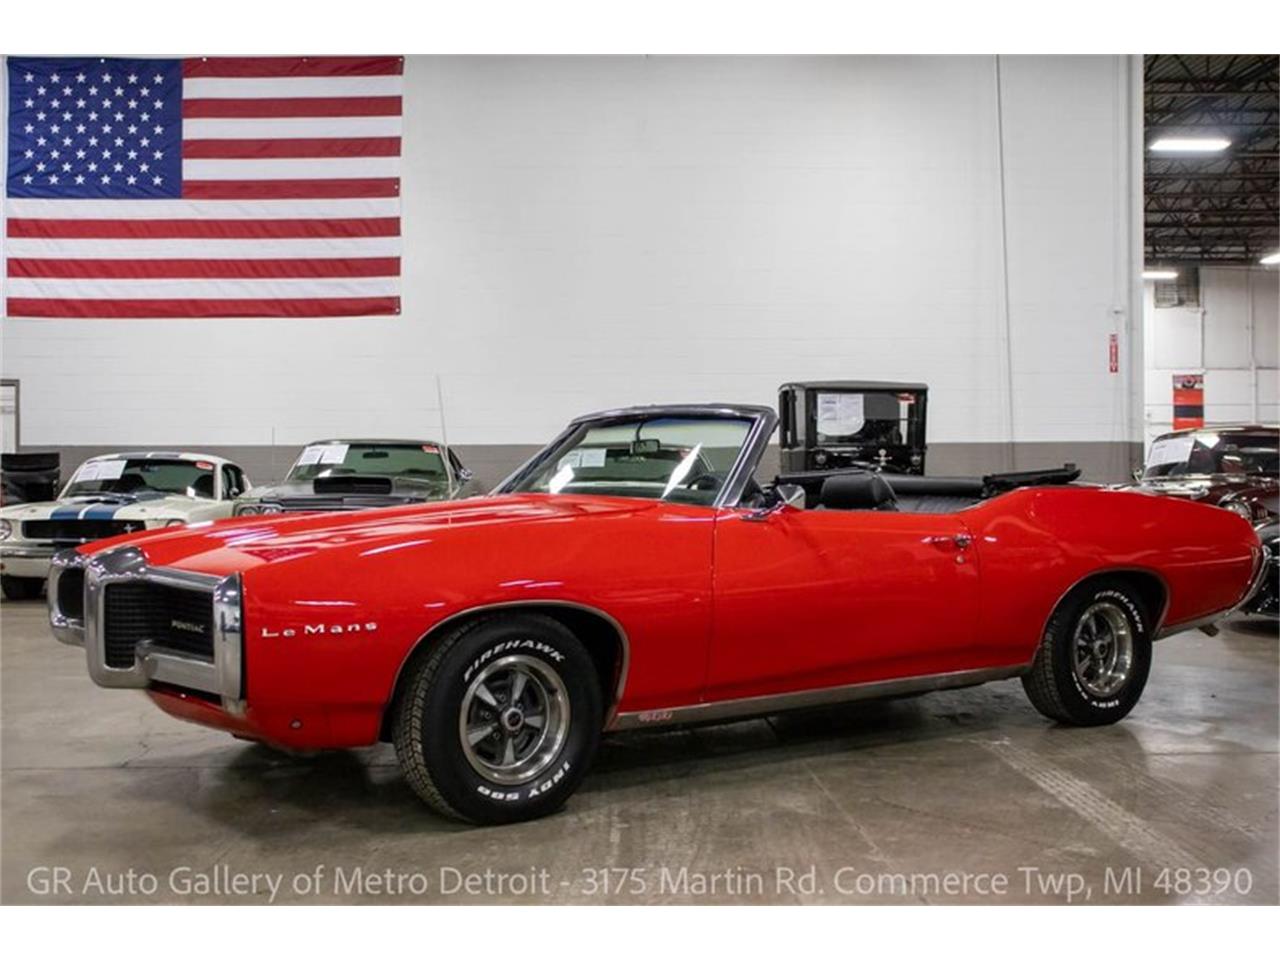 For Sale: 1969 Pontiac LeMans in Ken2od, Michigan for sale in Grand Rapids, MI